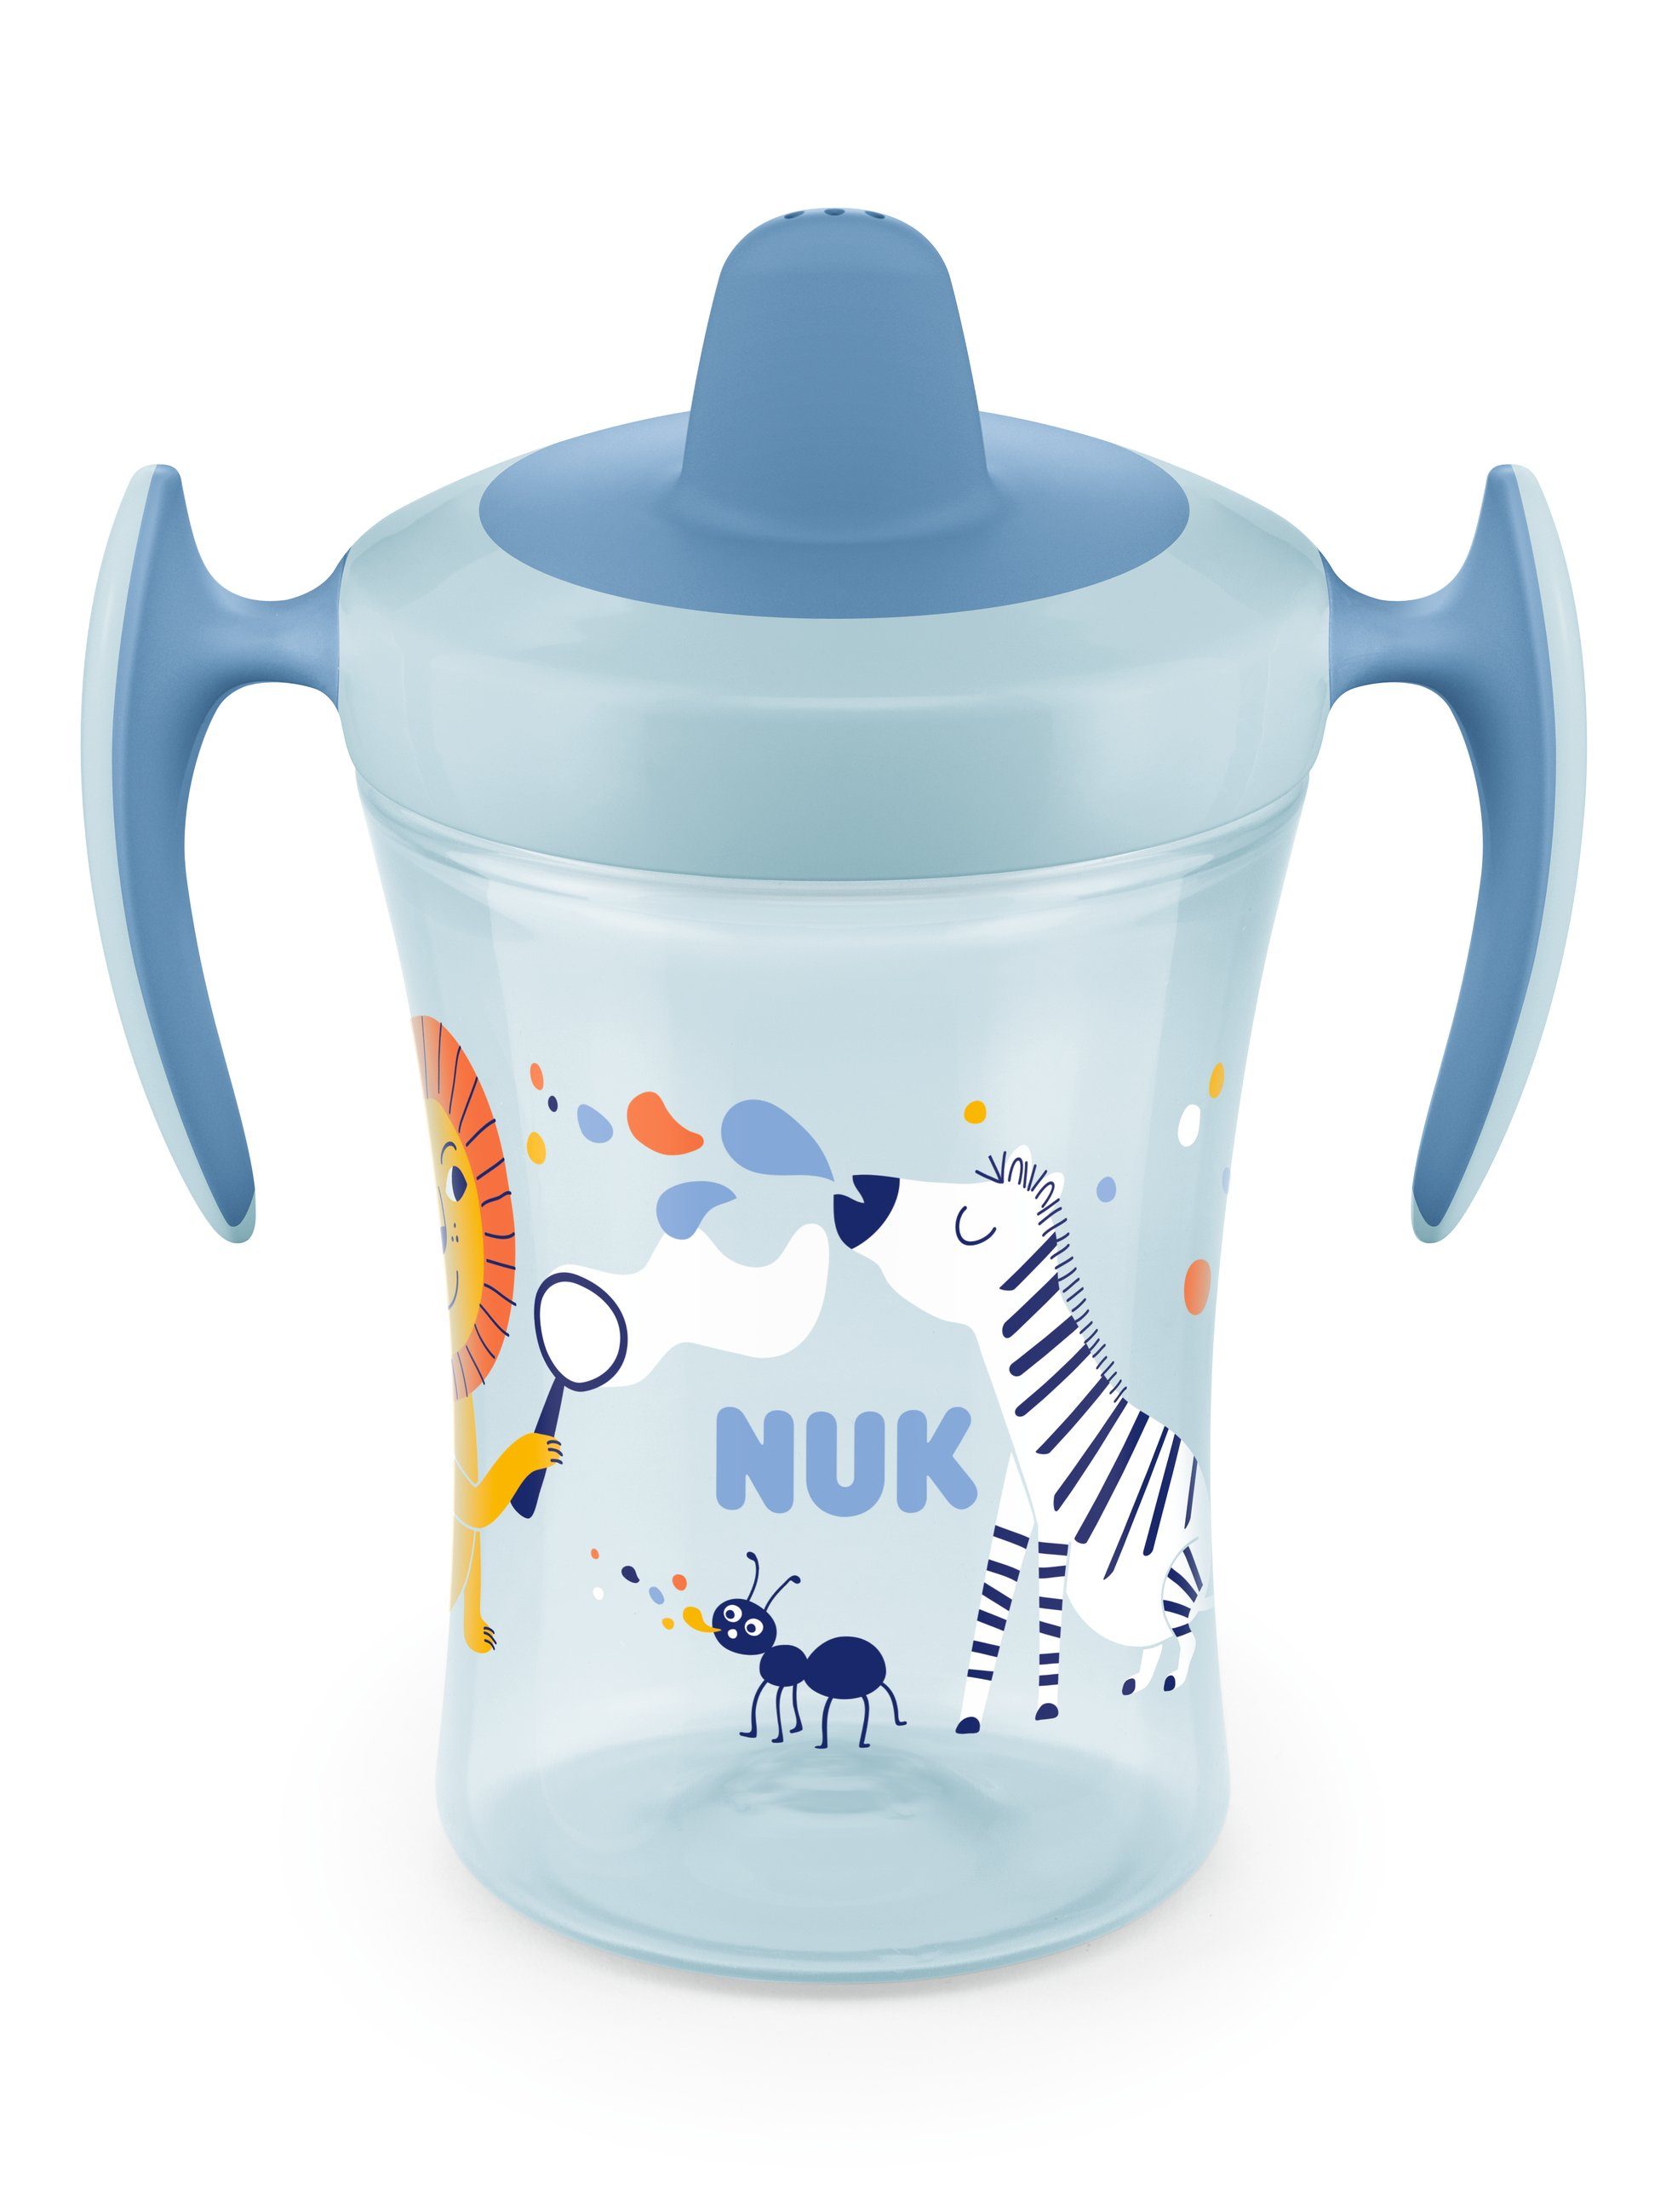 Cup 6 NUK ab BPA 10255608, Trainer auslaufsicher, NUK Babyflasche Monaten, 230ml